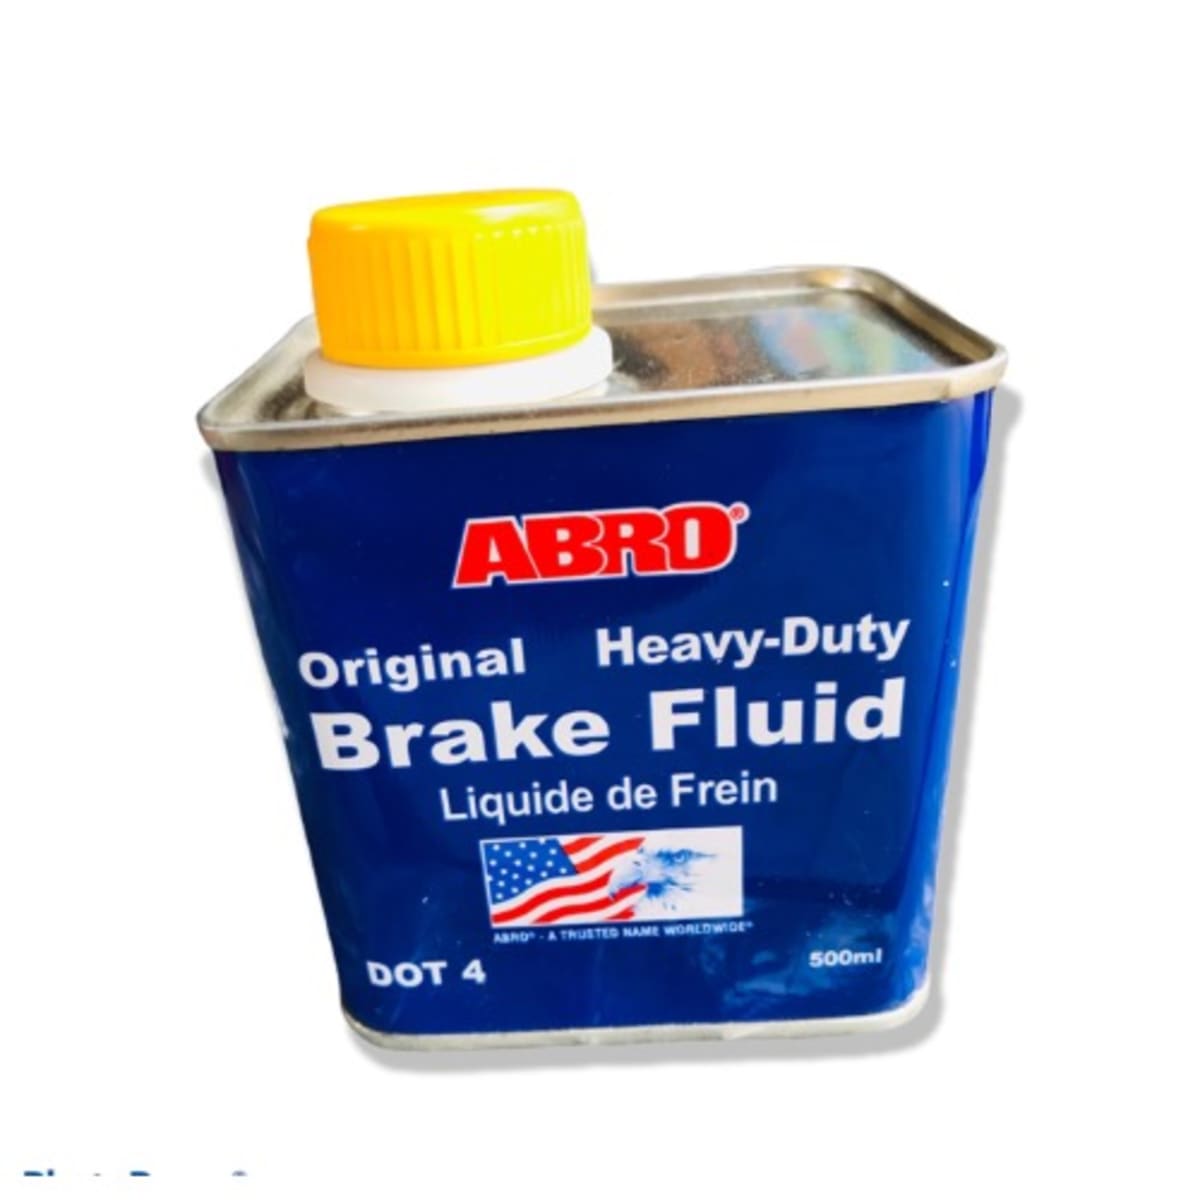 Liquide de frein BRAKE DOT 4 500ml IPONE - , Lubrifiant